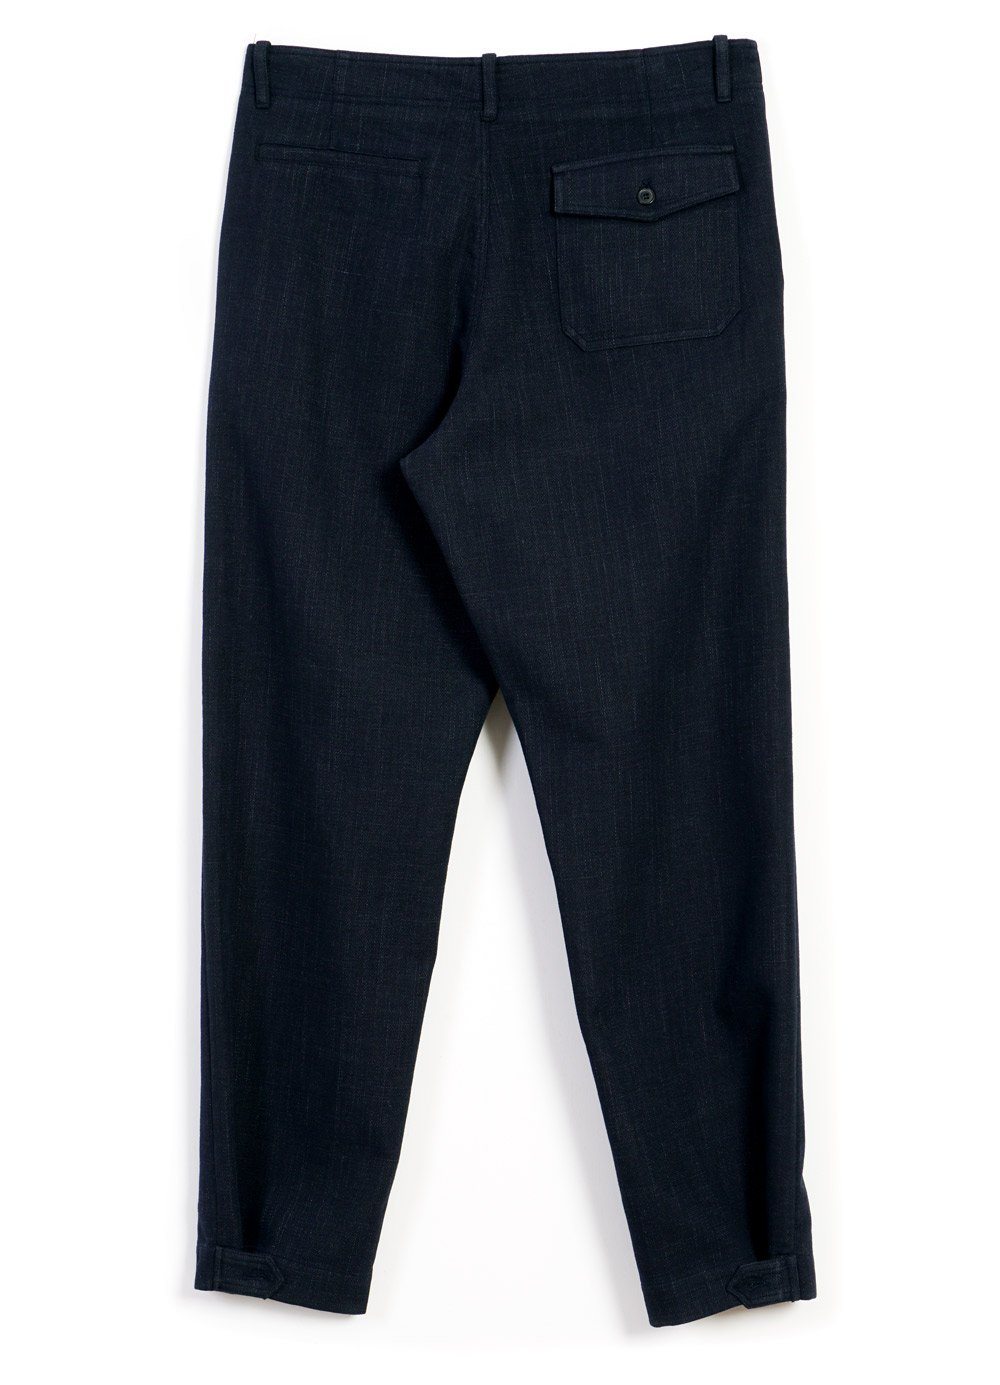 HANSEN Garments - TROND | Relaxed Everyday Trousers | Navy Melange - HANSEN Garments